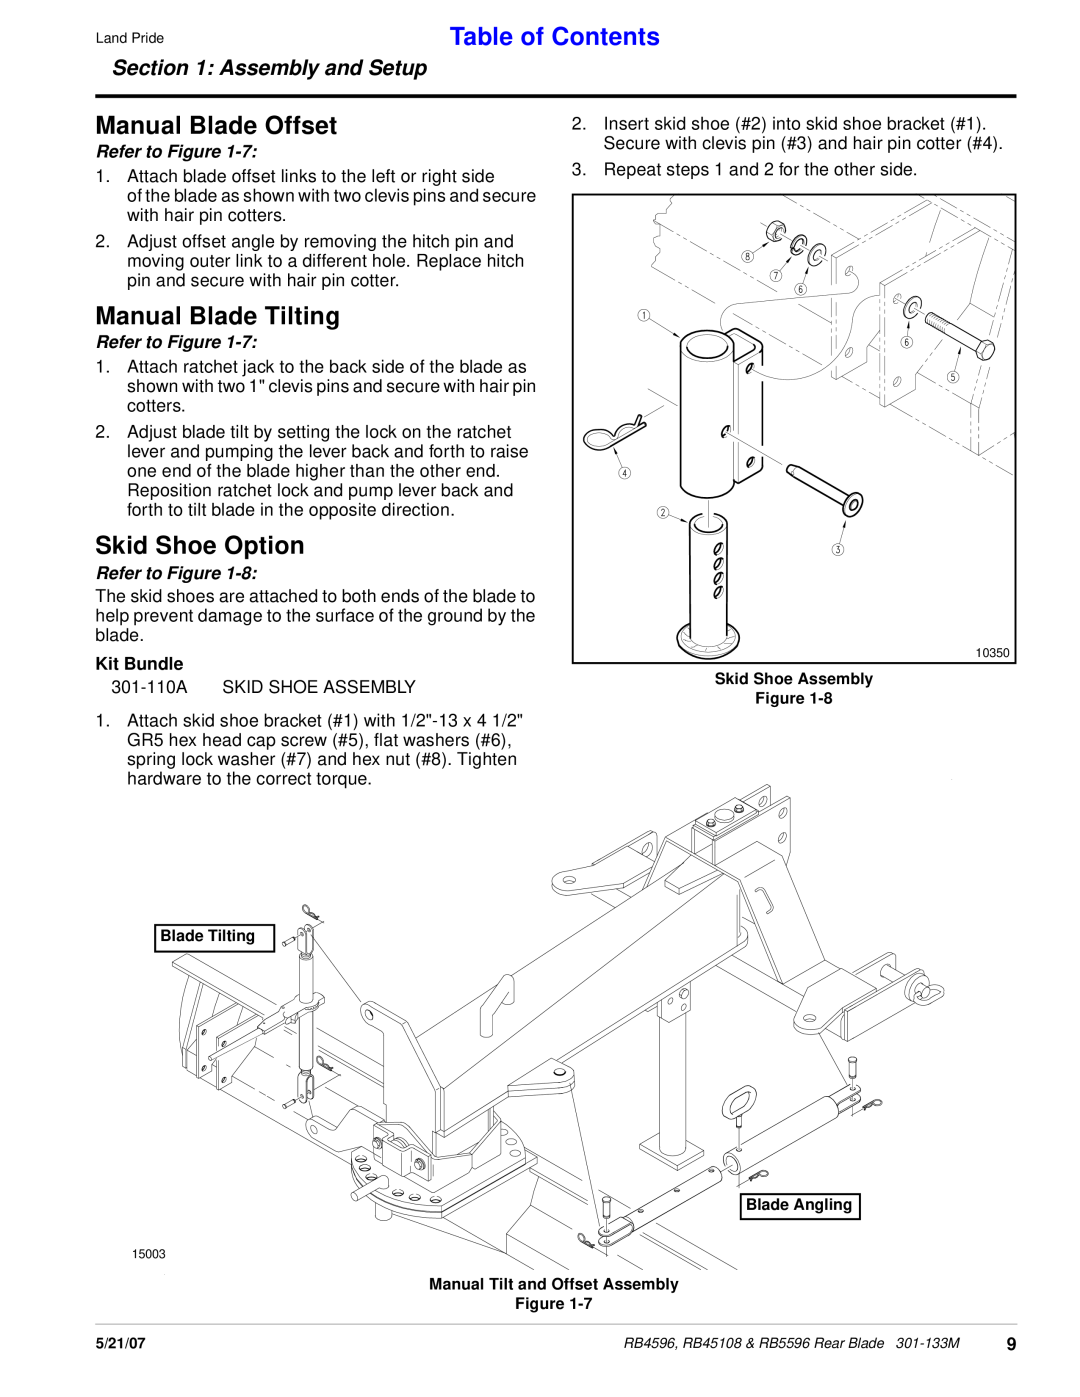 Land Pride RB45108, RB5596 manual Manual Blade Offset, Manual Blade Tilting, Skid Shoe Option, Kit Bundle, Table of Contents 